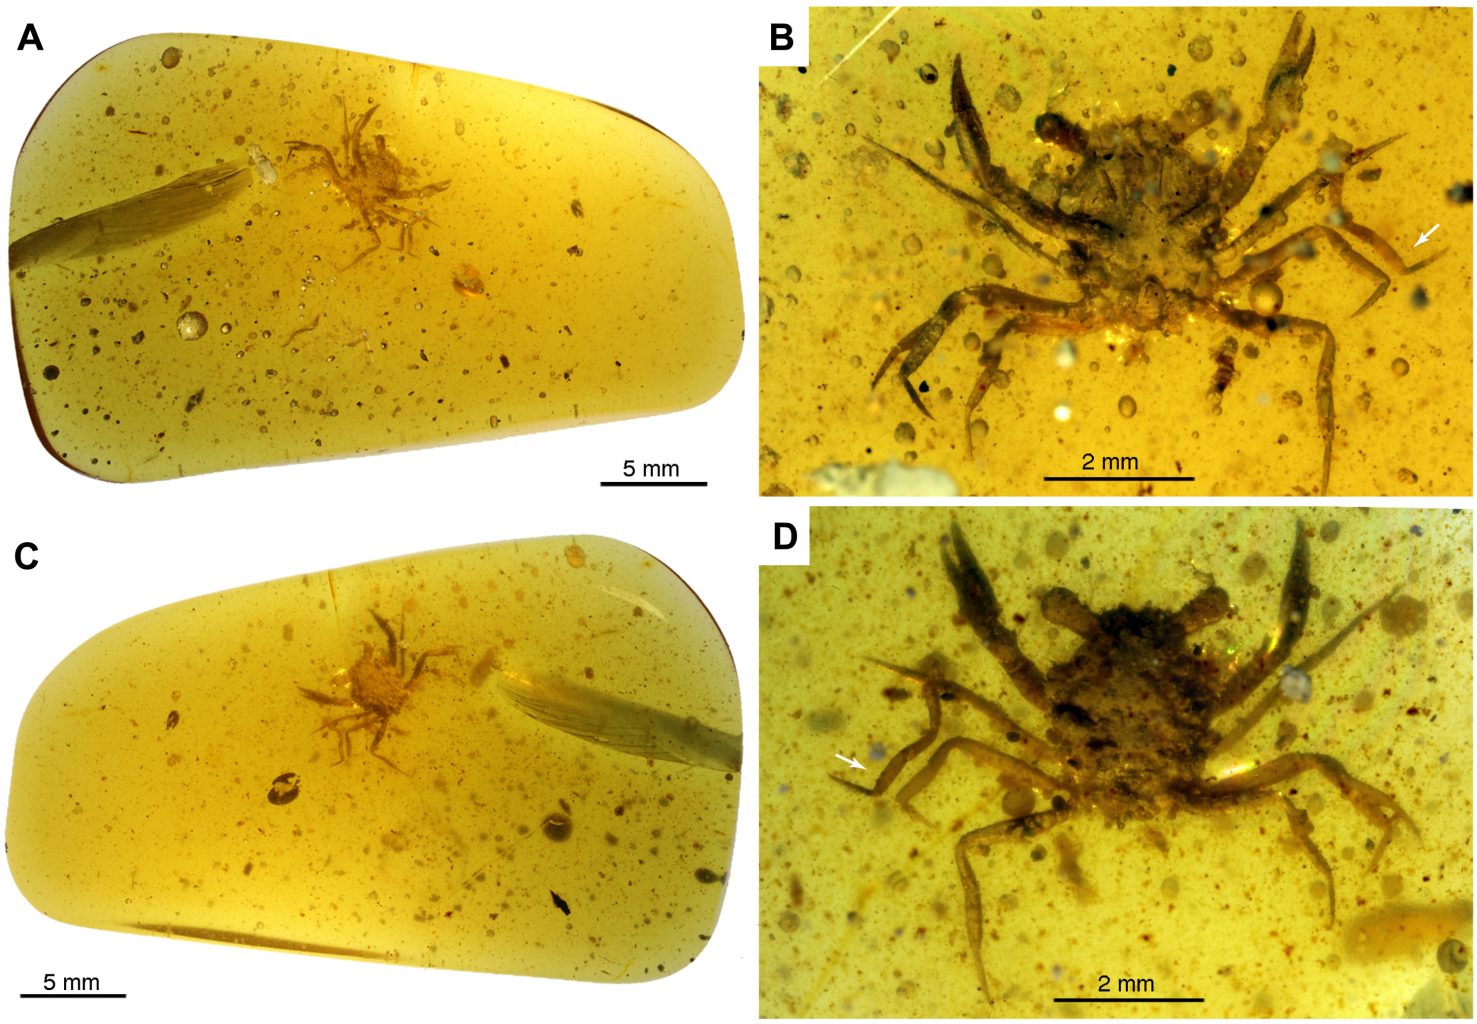 Cretapsara athanata in a piece of amber. Credit: Javier Luque et al. / Science Advances, 2021